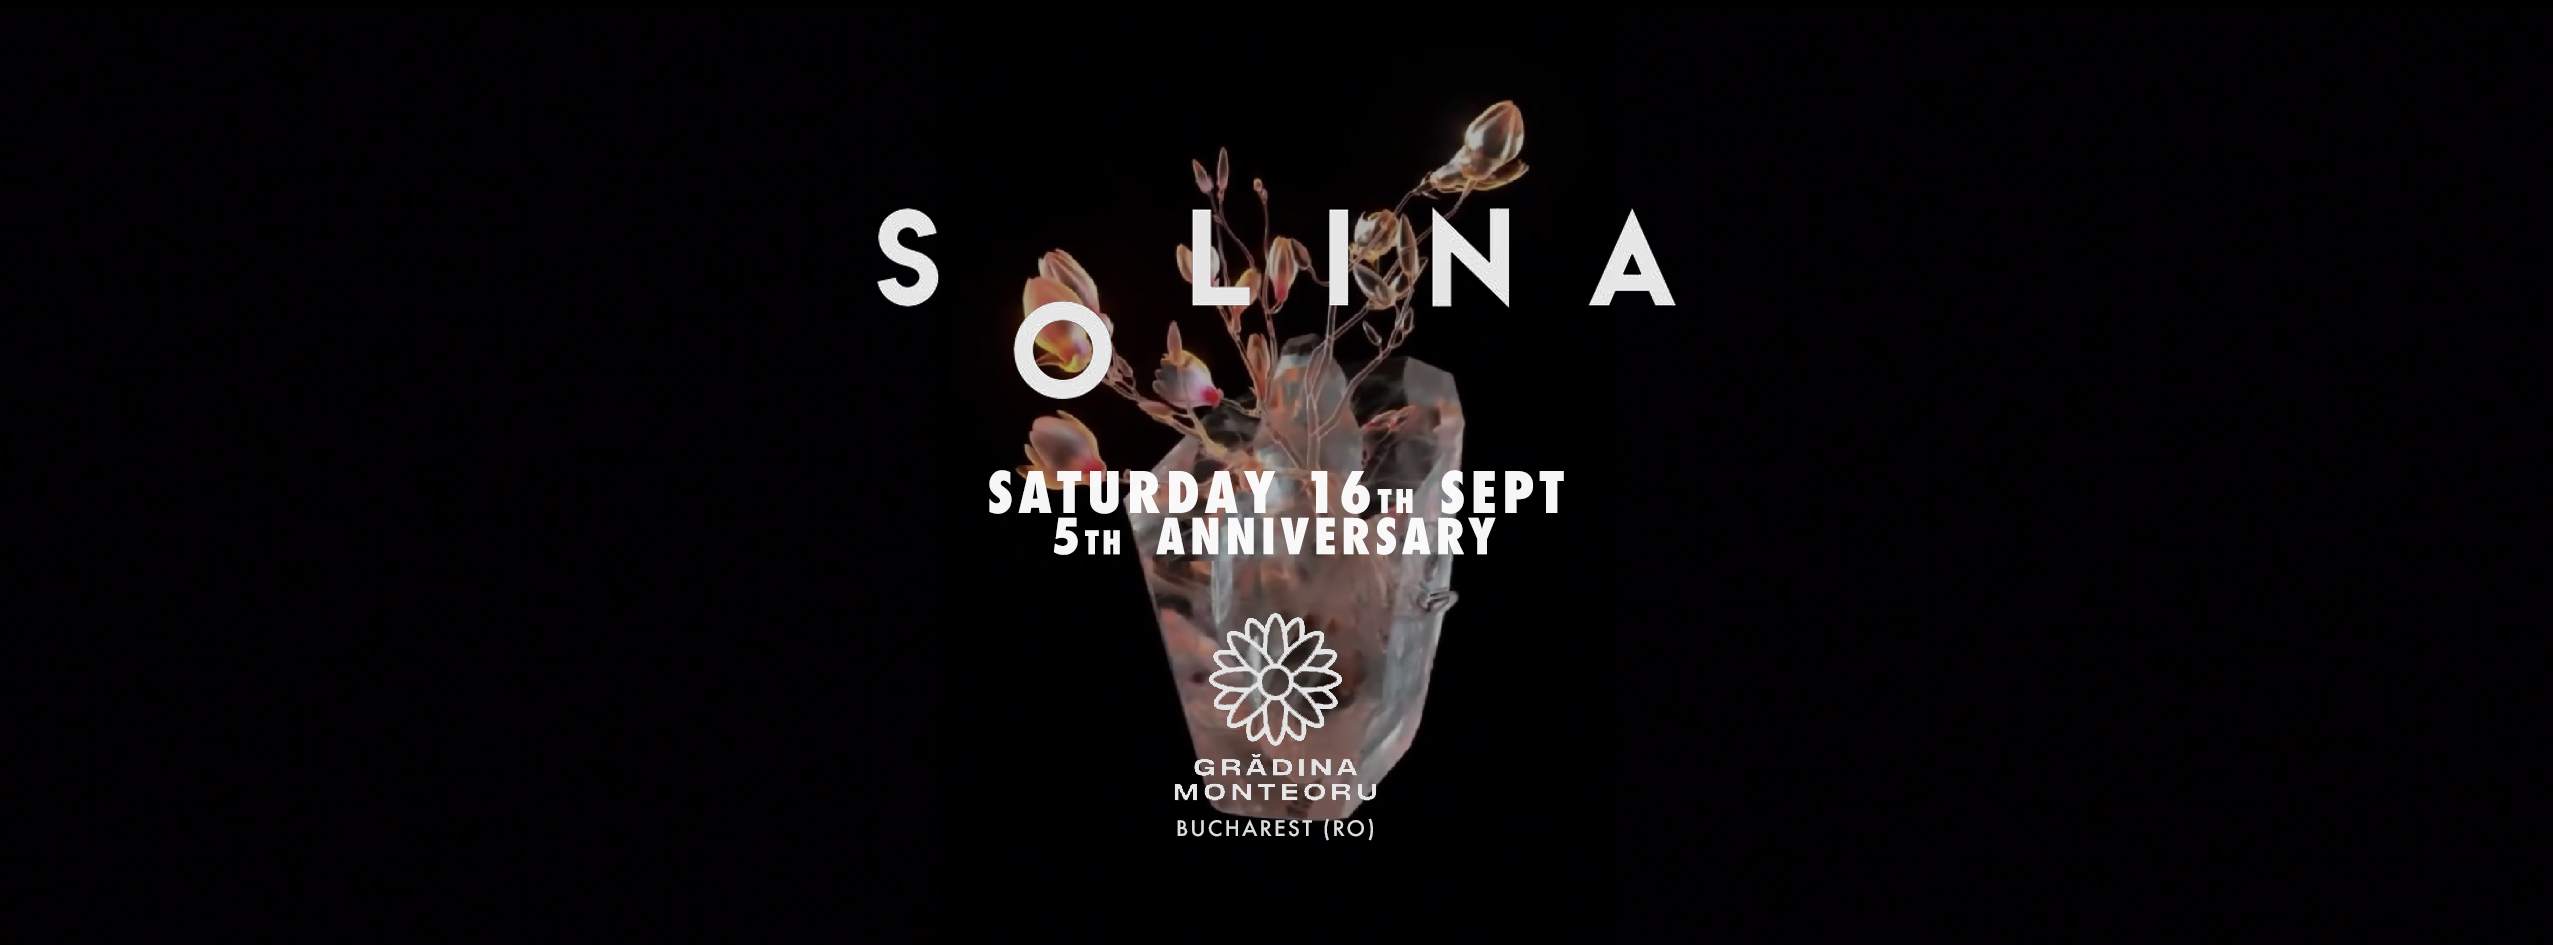 Solina - 5th Anniversary - フライヤー表